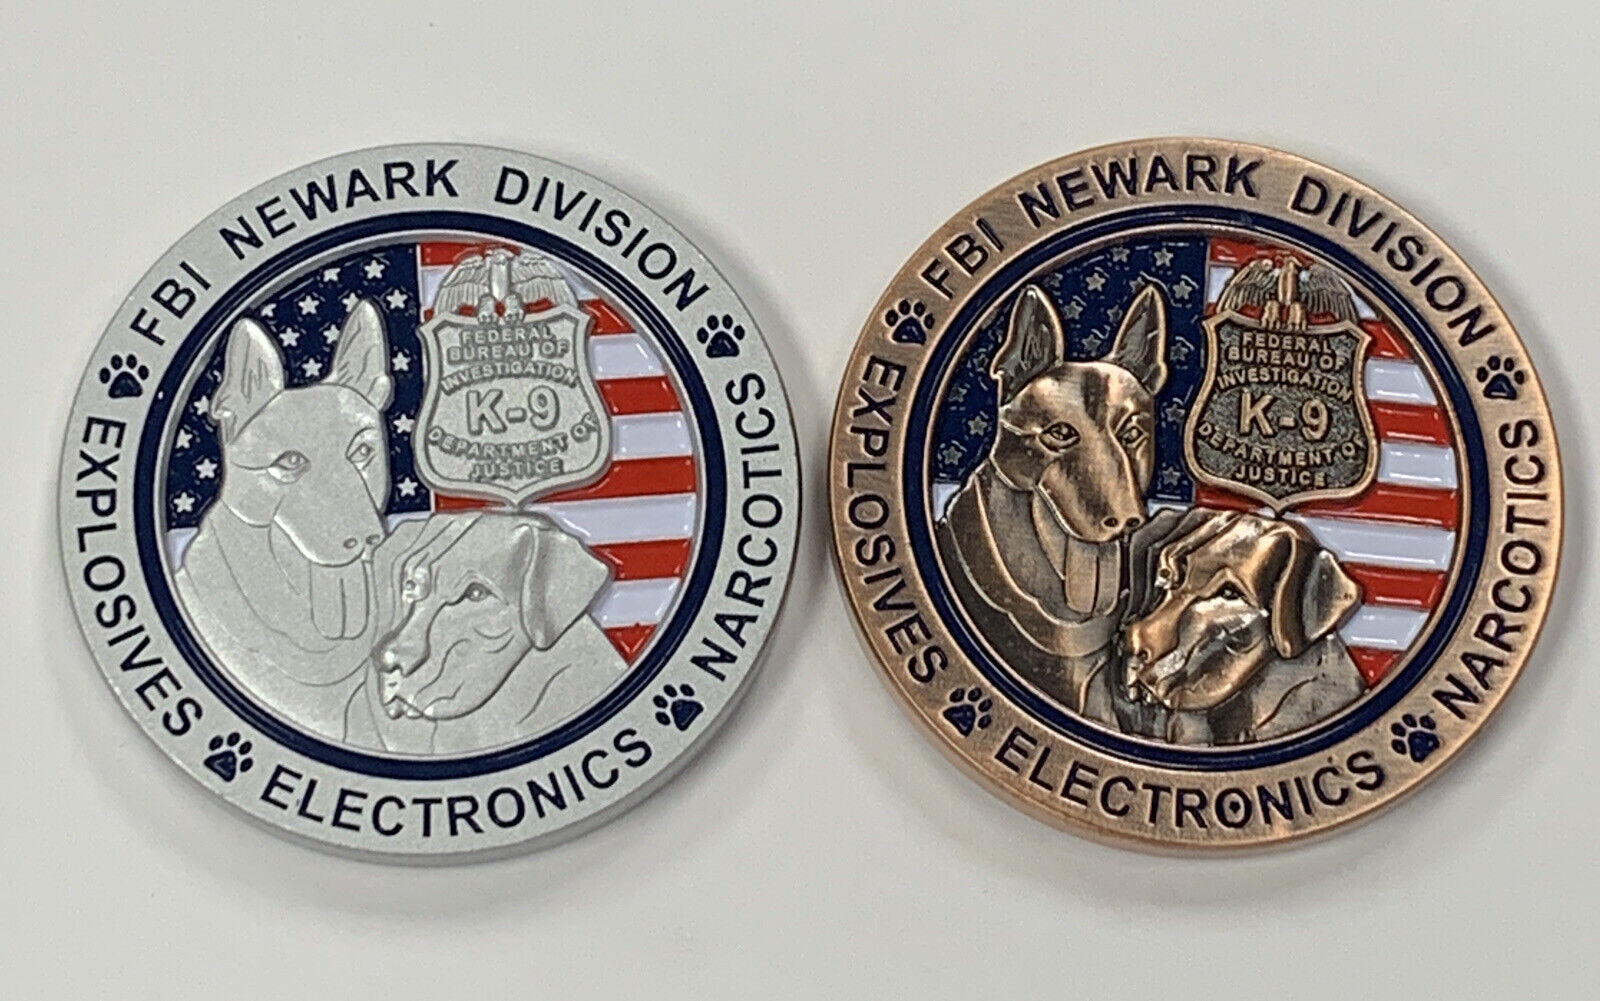 2 - FBI Newark Division K9 Dog Challenge Coins